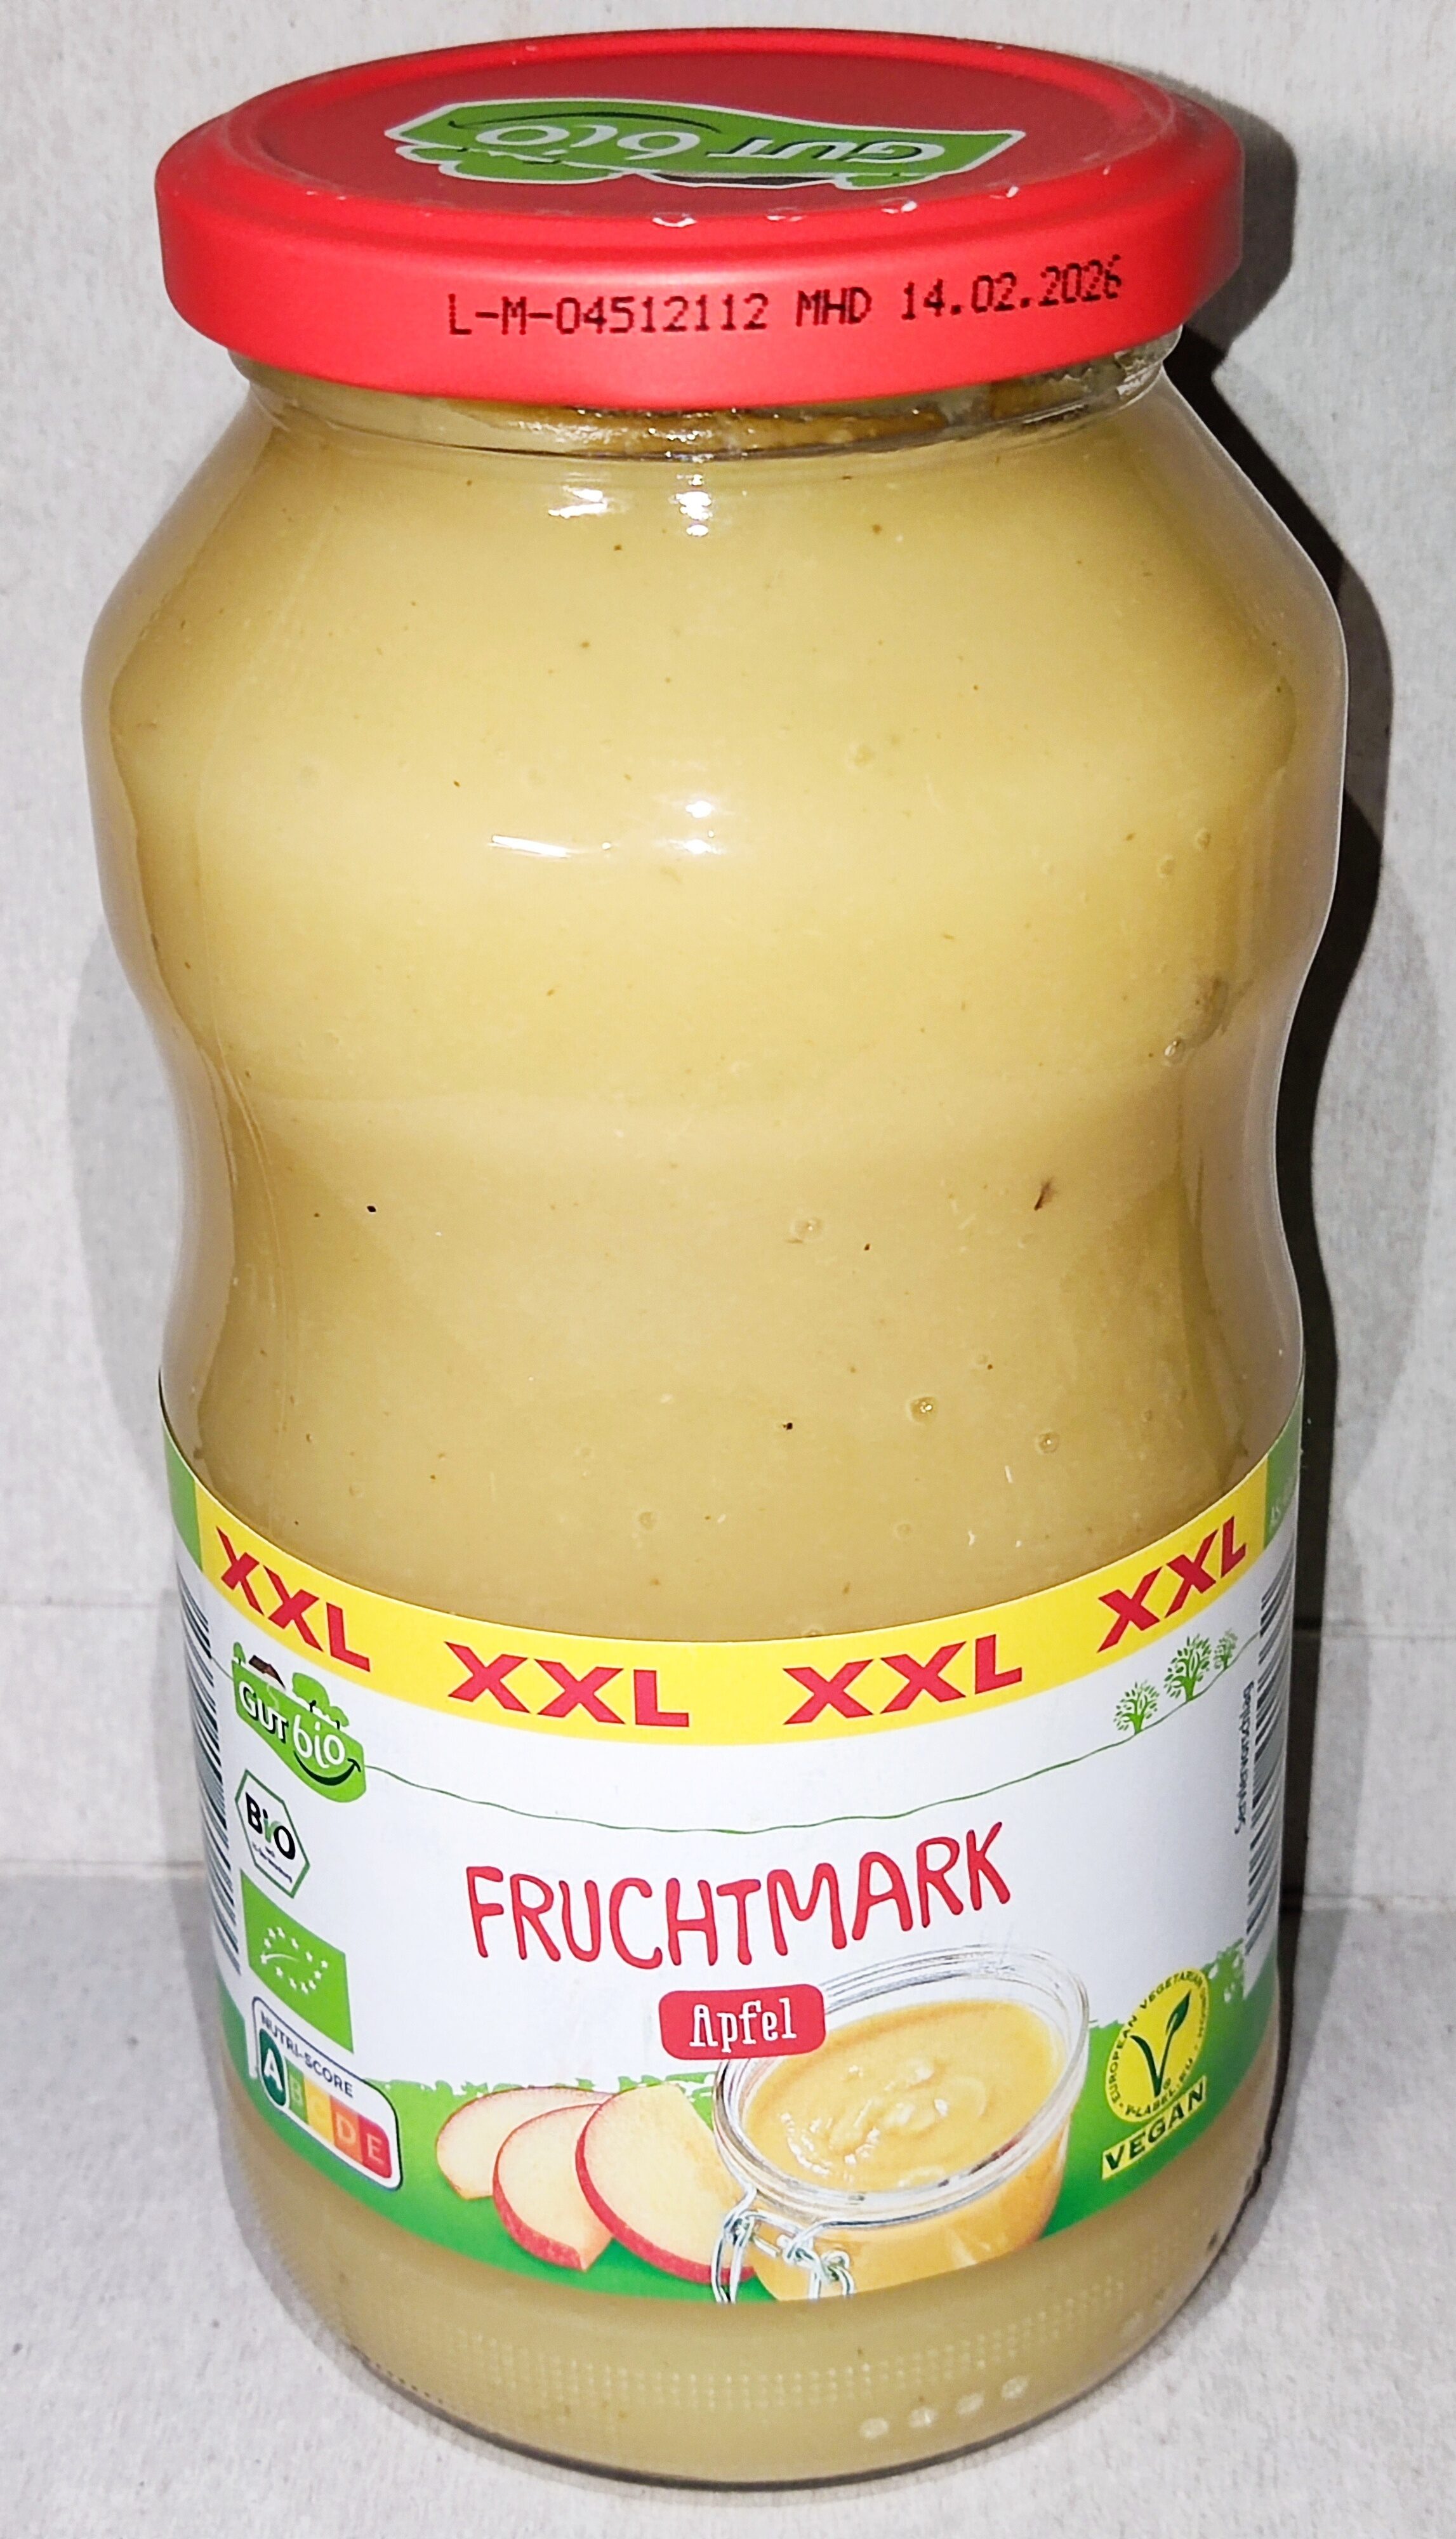 Bio-Fruchtmark XXL - Apfel - Produkt